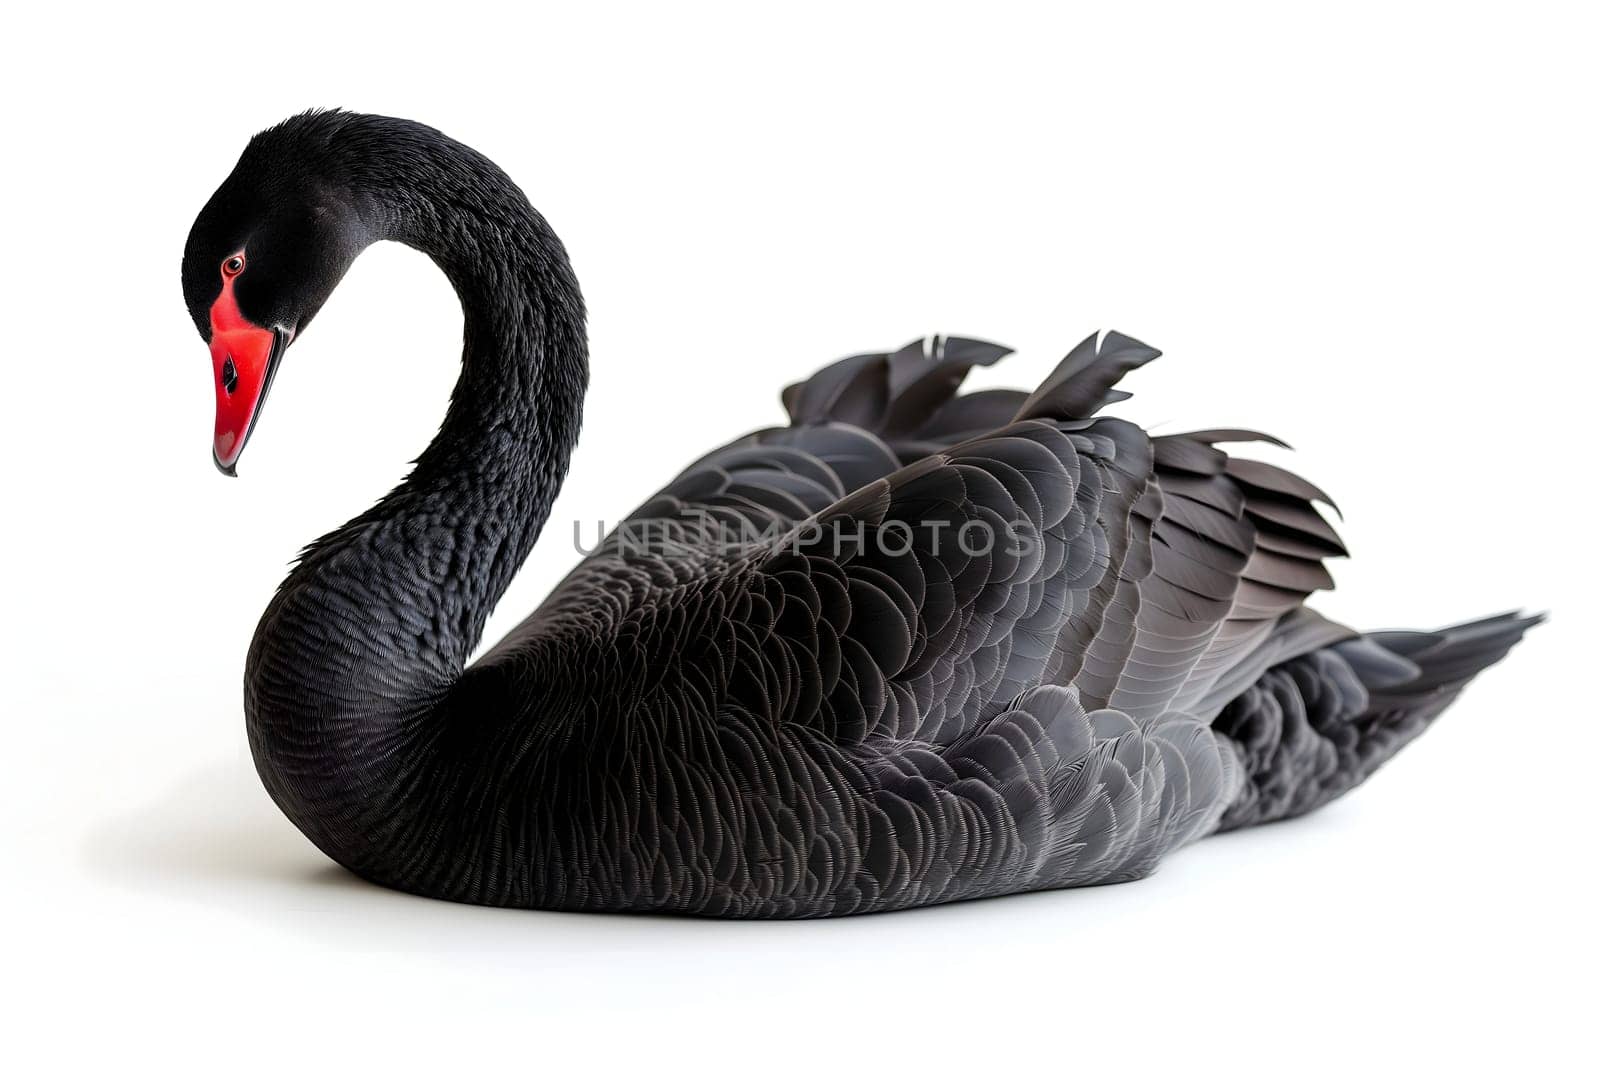 Black swan on white background by z1b